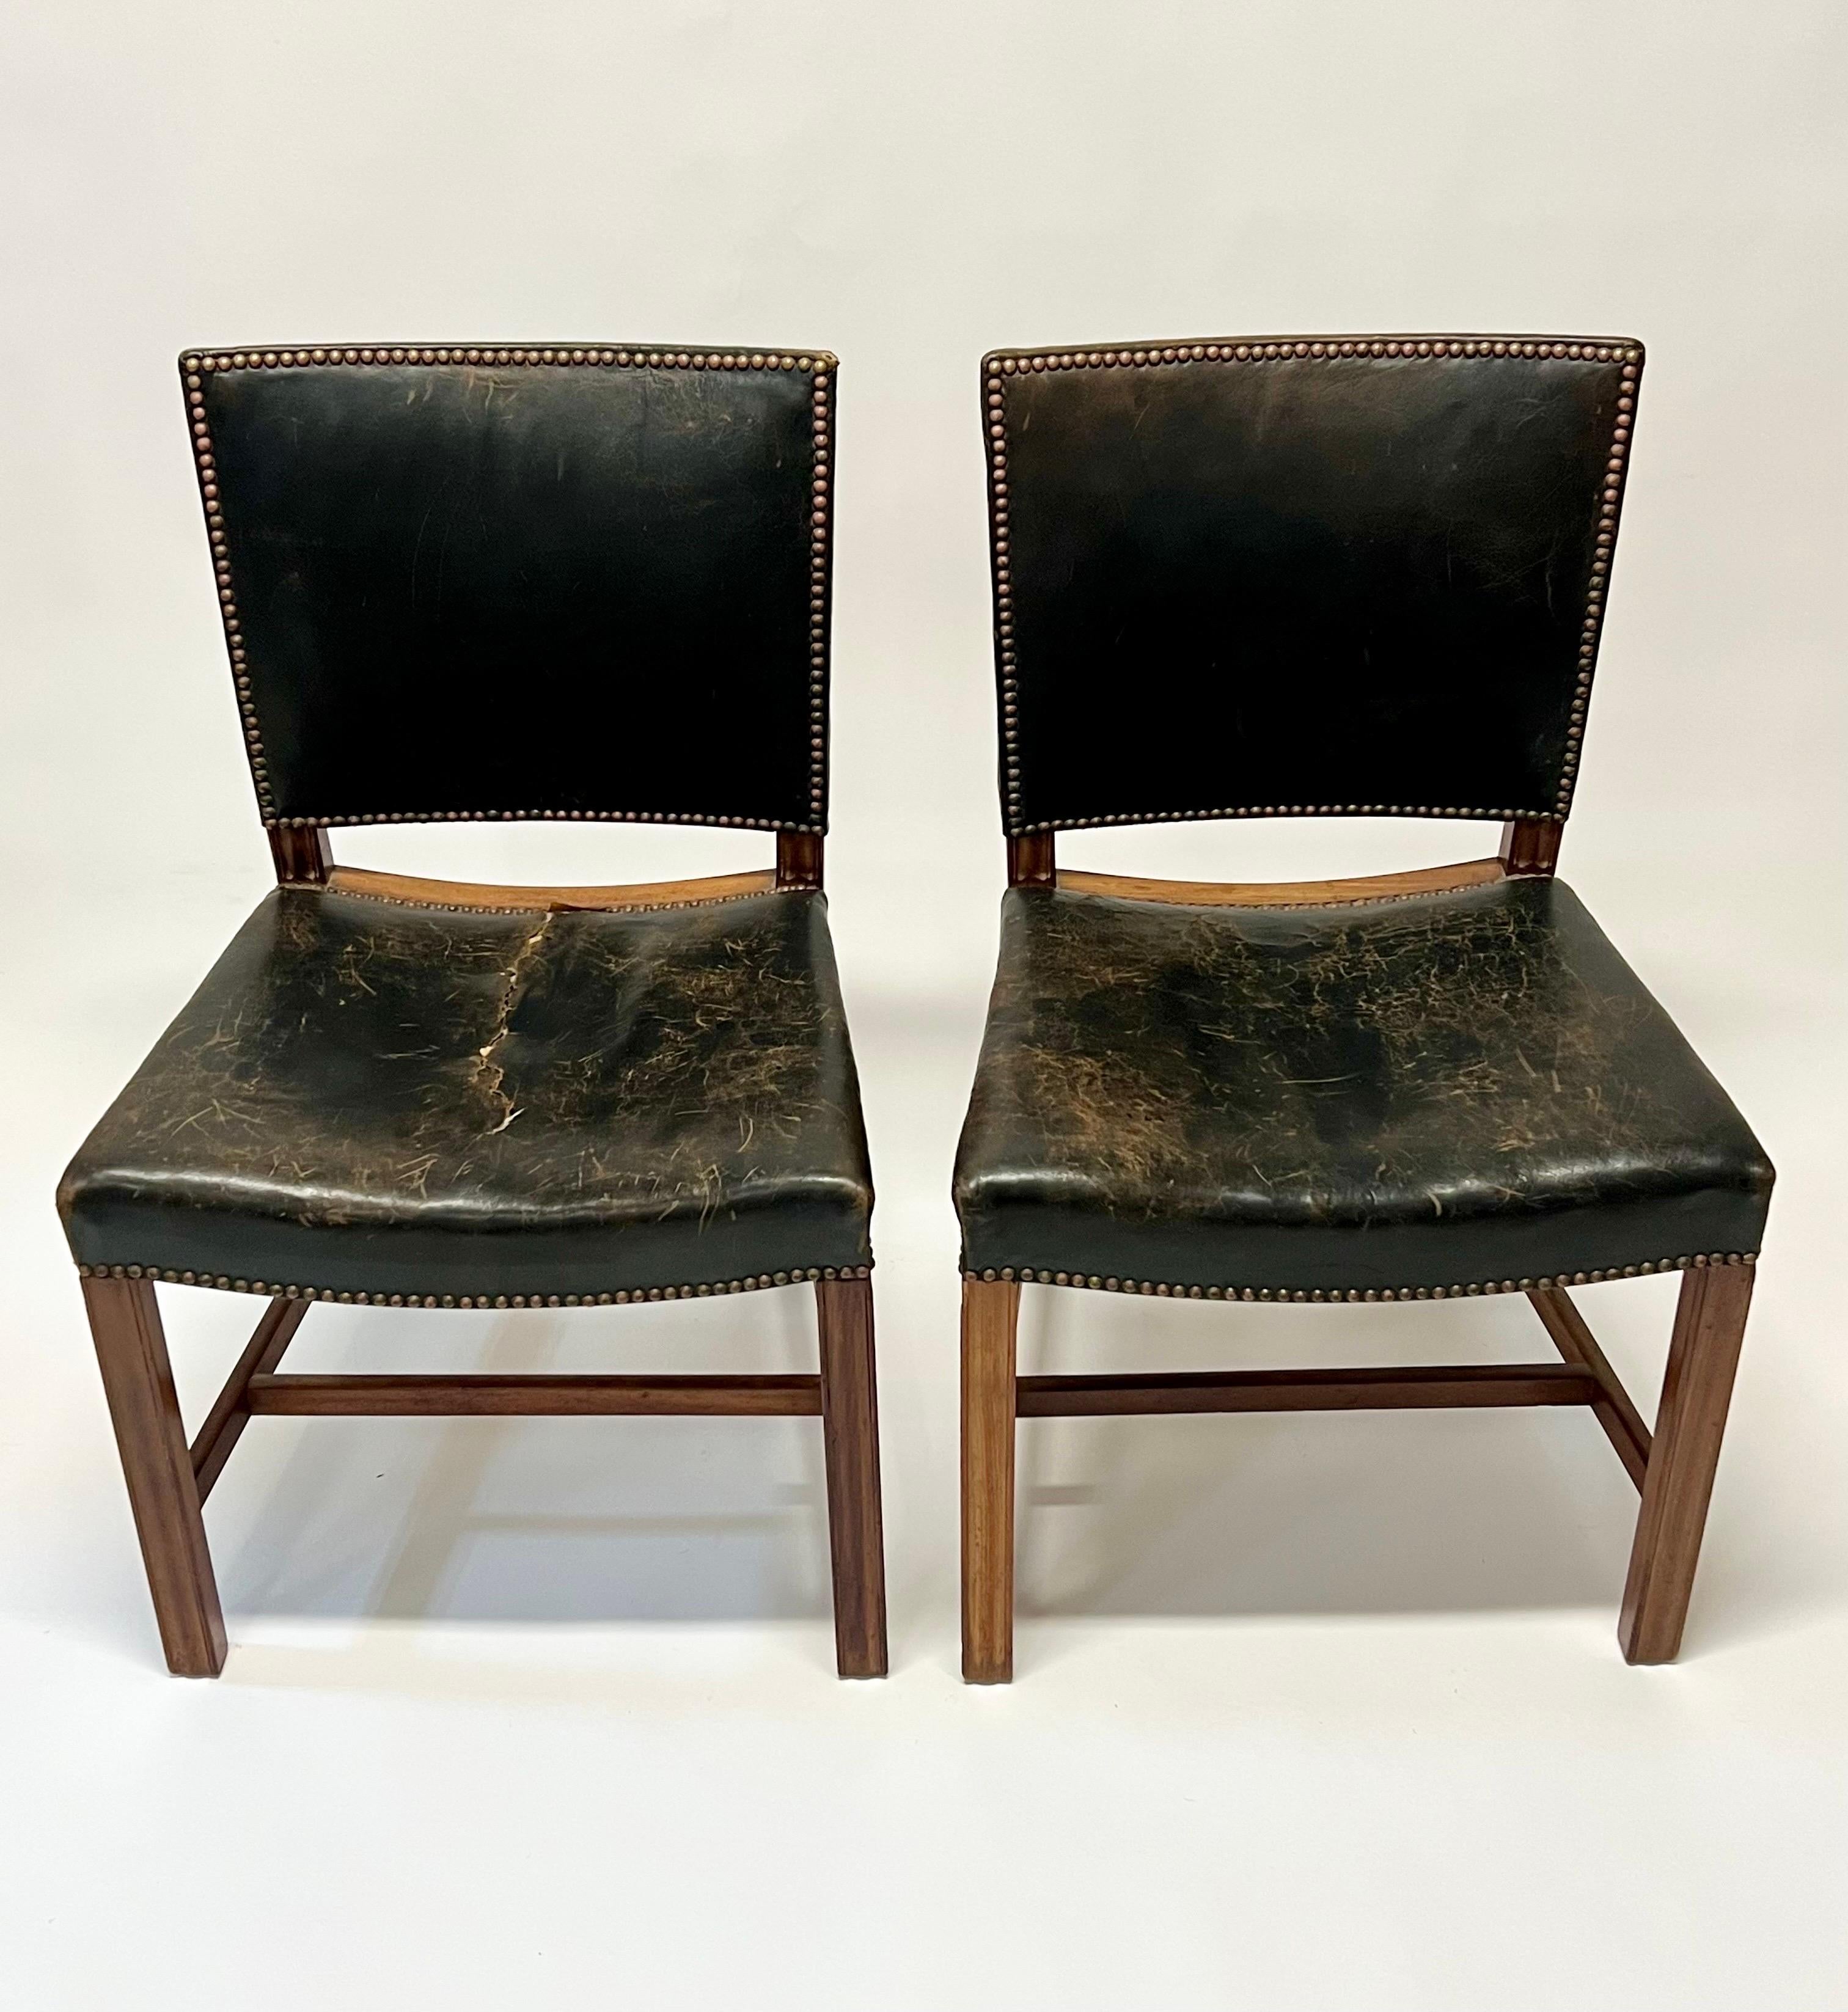 Frühe Kaare Klint-Stühle aus kubanischem Mahagoni, ca. 1930er Jahre (Moderne) im Angebot